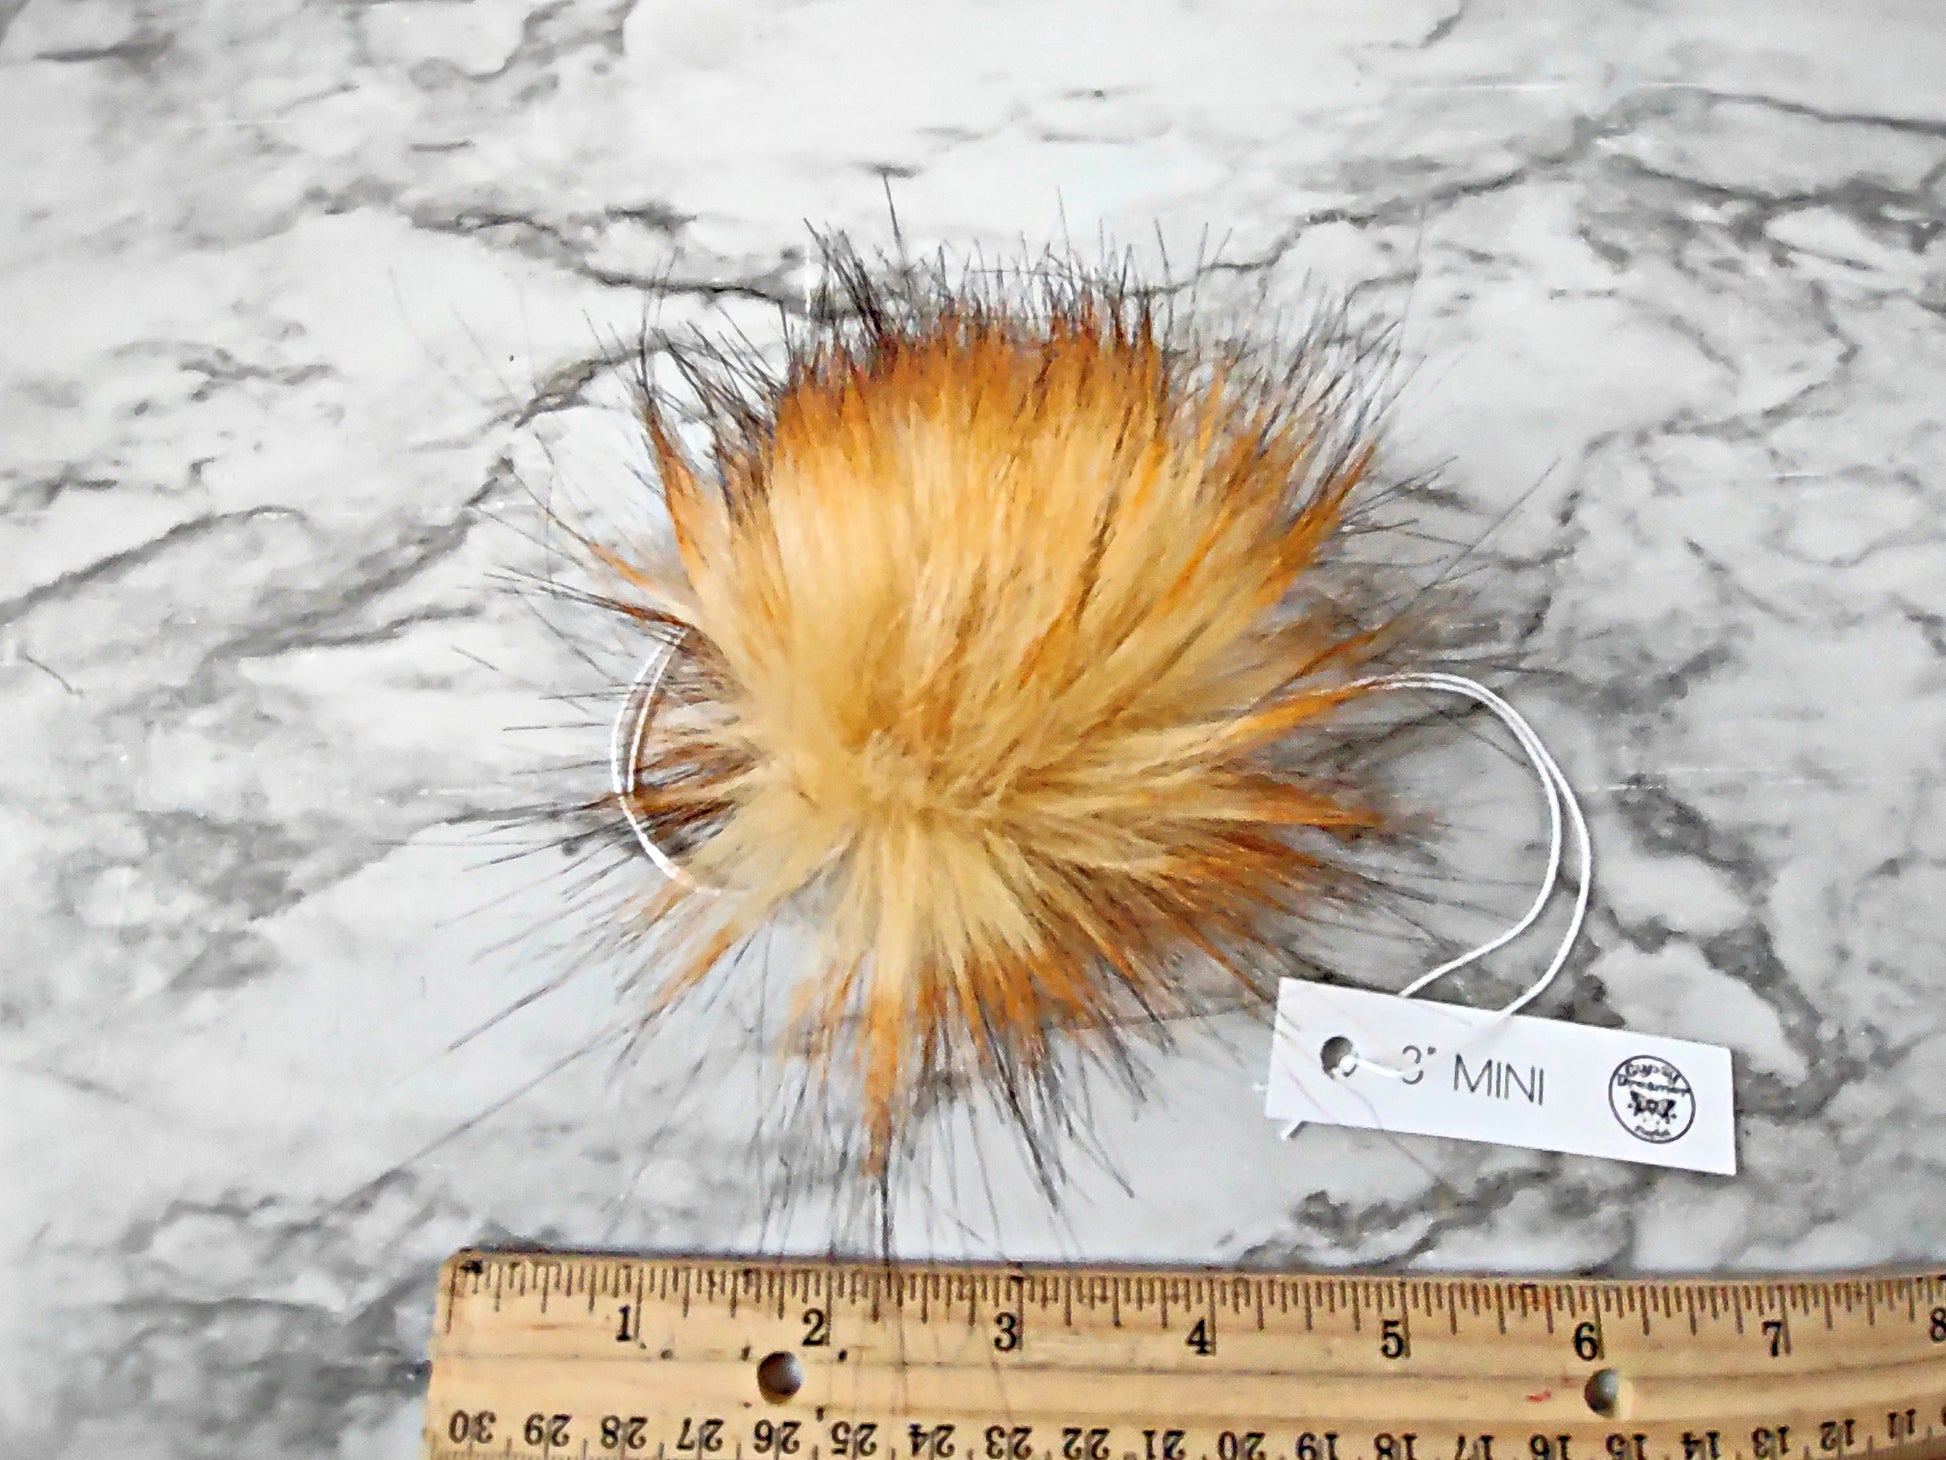 30/20/10/5/2 Pieces Faux Fox Fur Pom Pom Balls DIY Fur Fluffy Pom